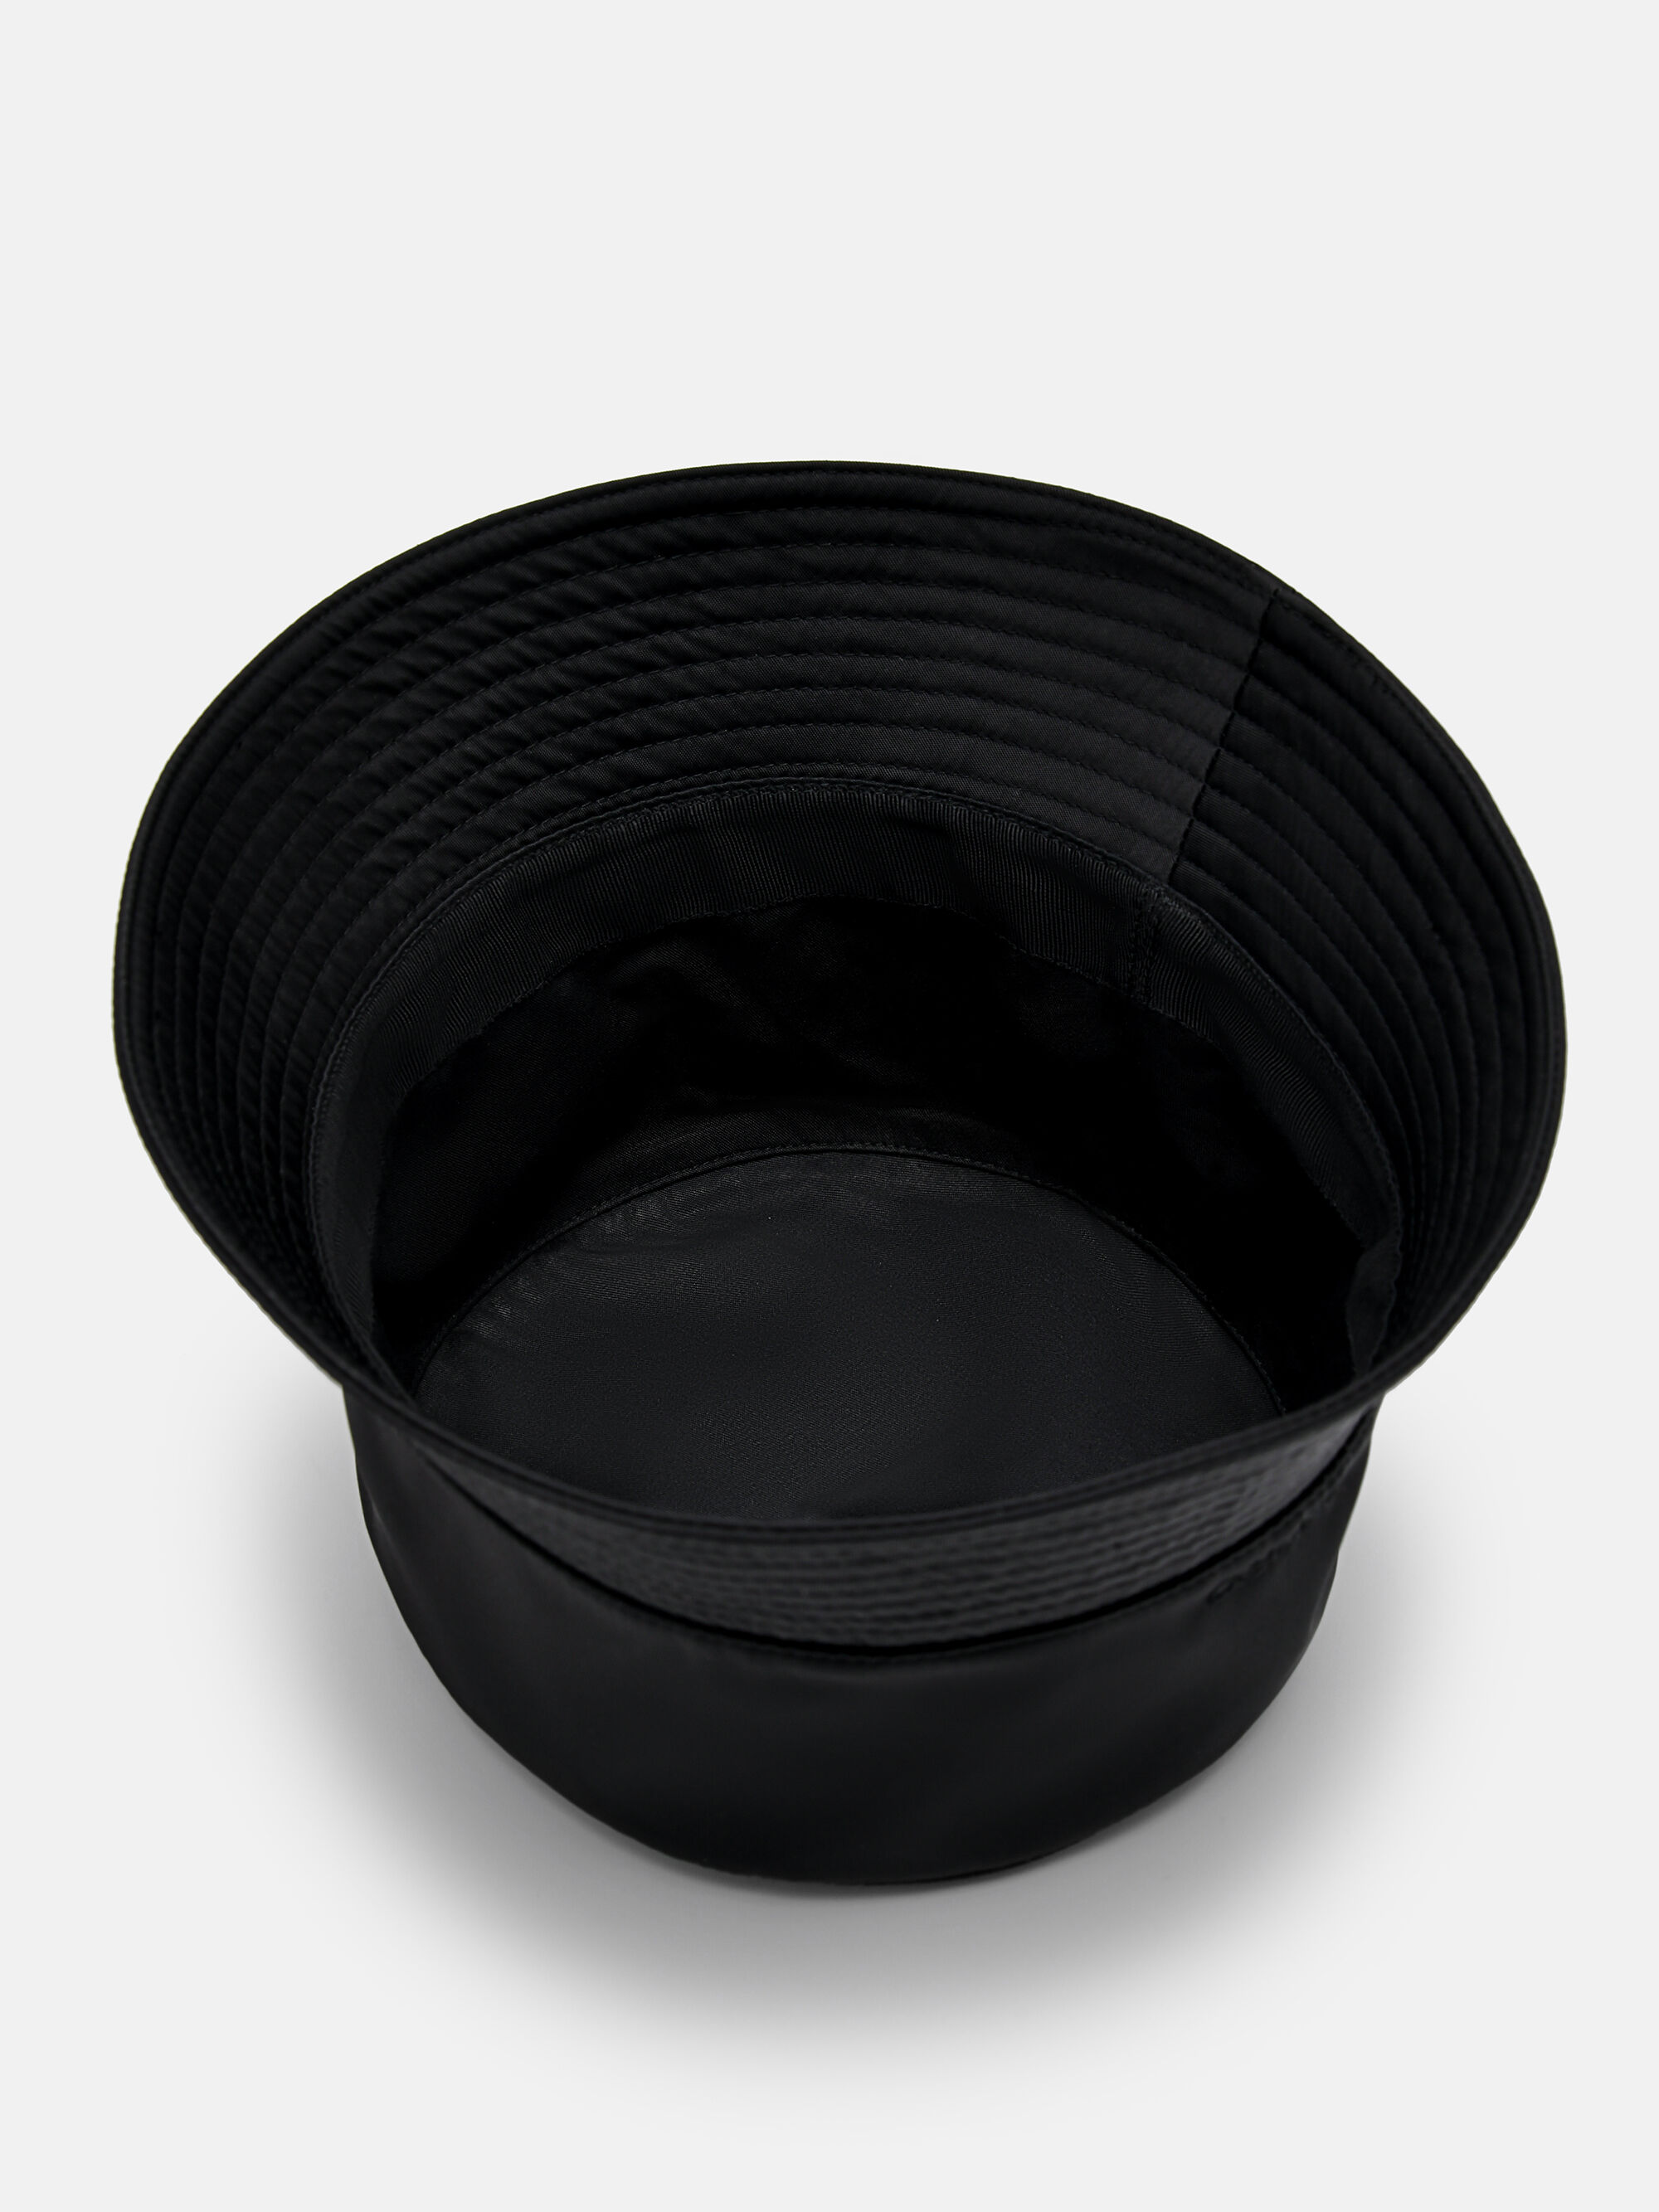 PEDRO Icon Nylon Bucket Hat, Black